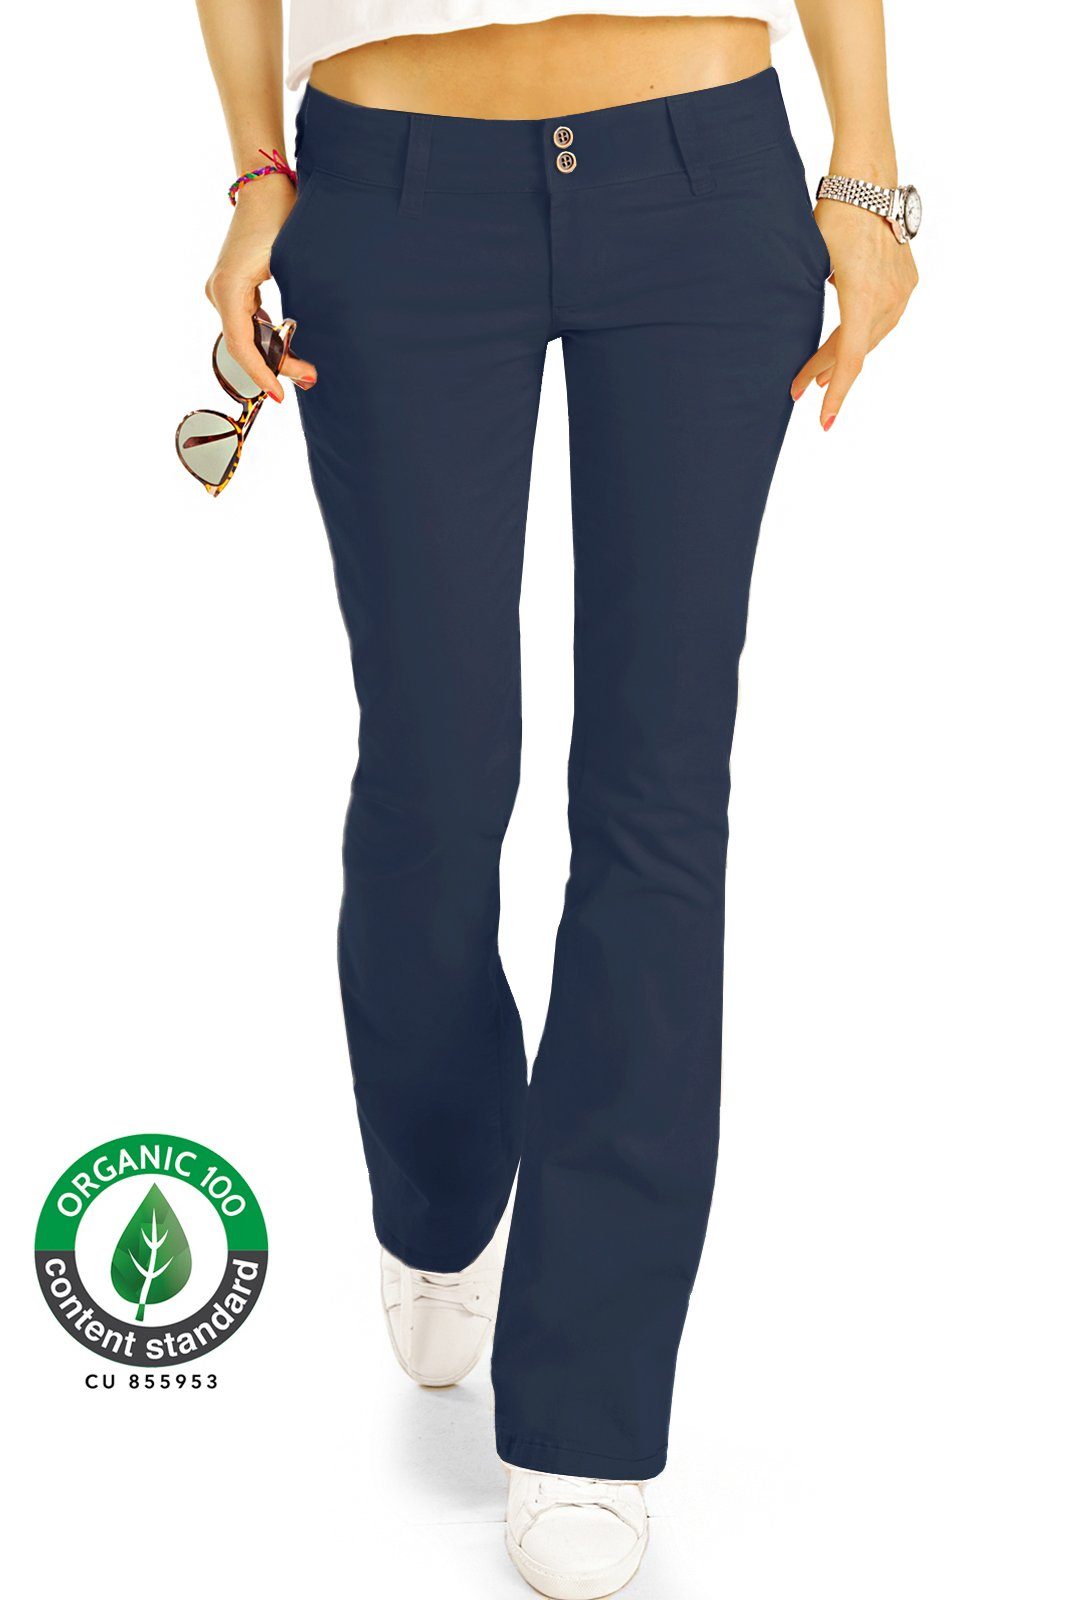 Damen Jeans Hose Jeanshose Denim Stoffhose Hüfthose Blau sehr weich  Gr.XS-XL 